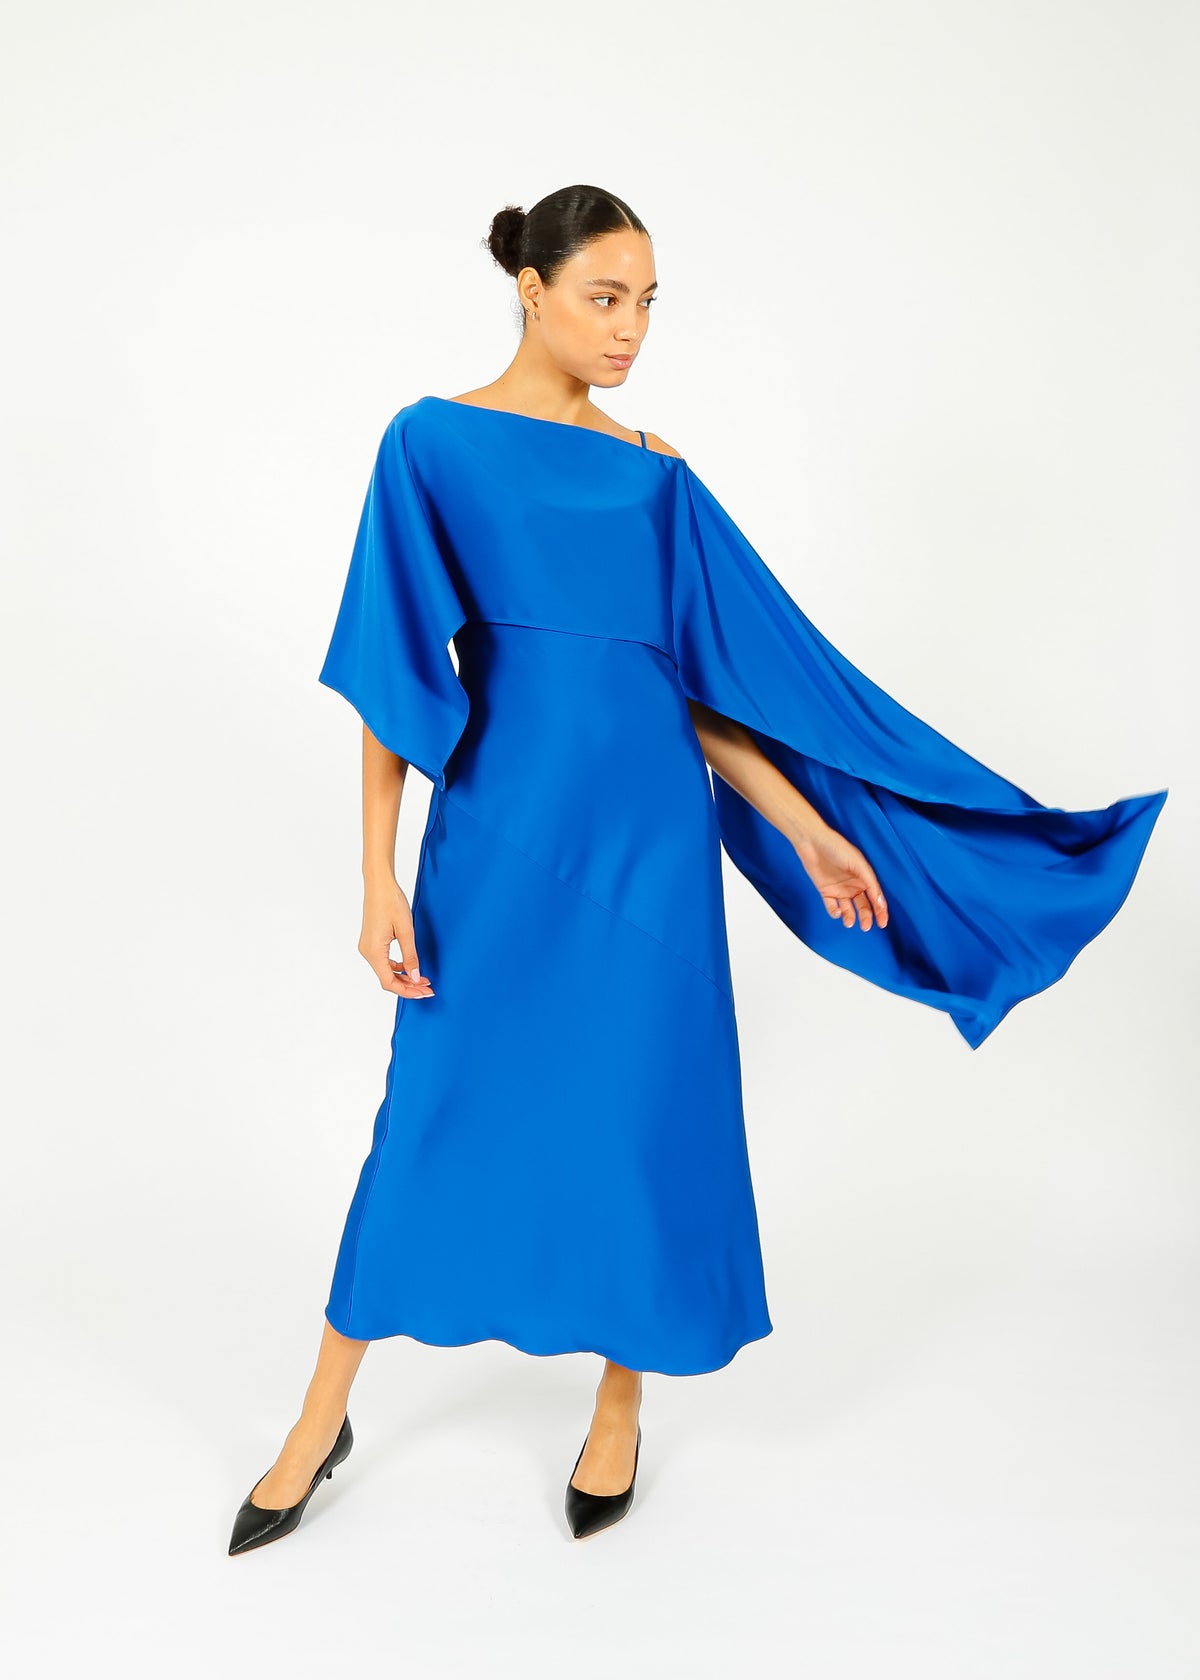 MM Micron Dress in Cornflower Blue